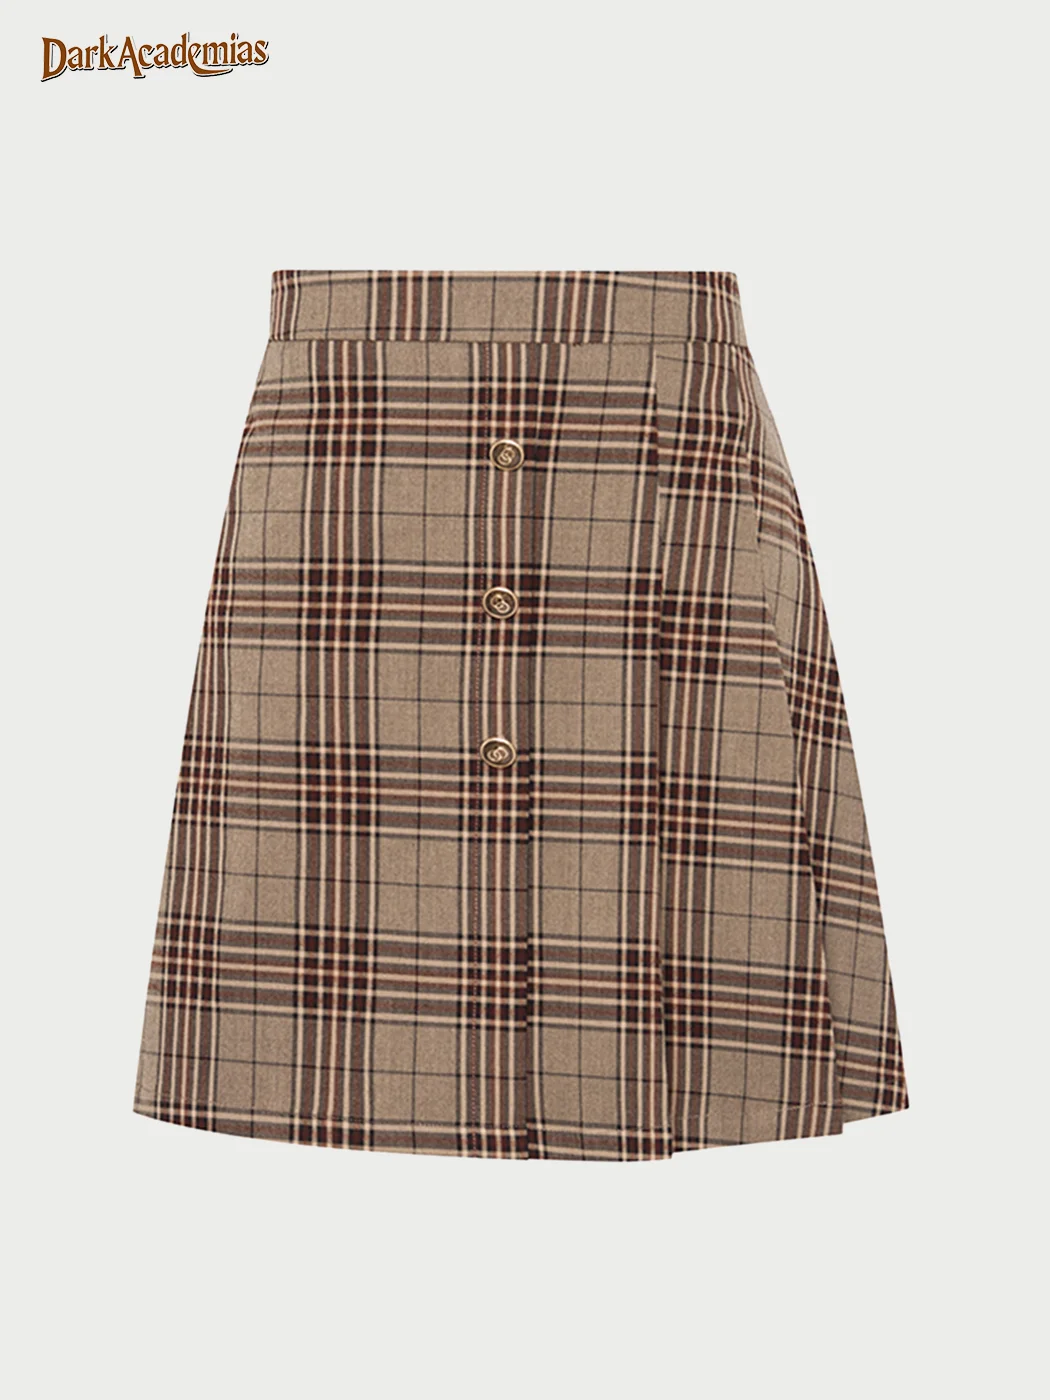 Thames Vintage Checked Pleated Skirt / DarkAcademias /Darkacademias